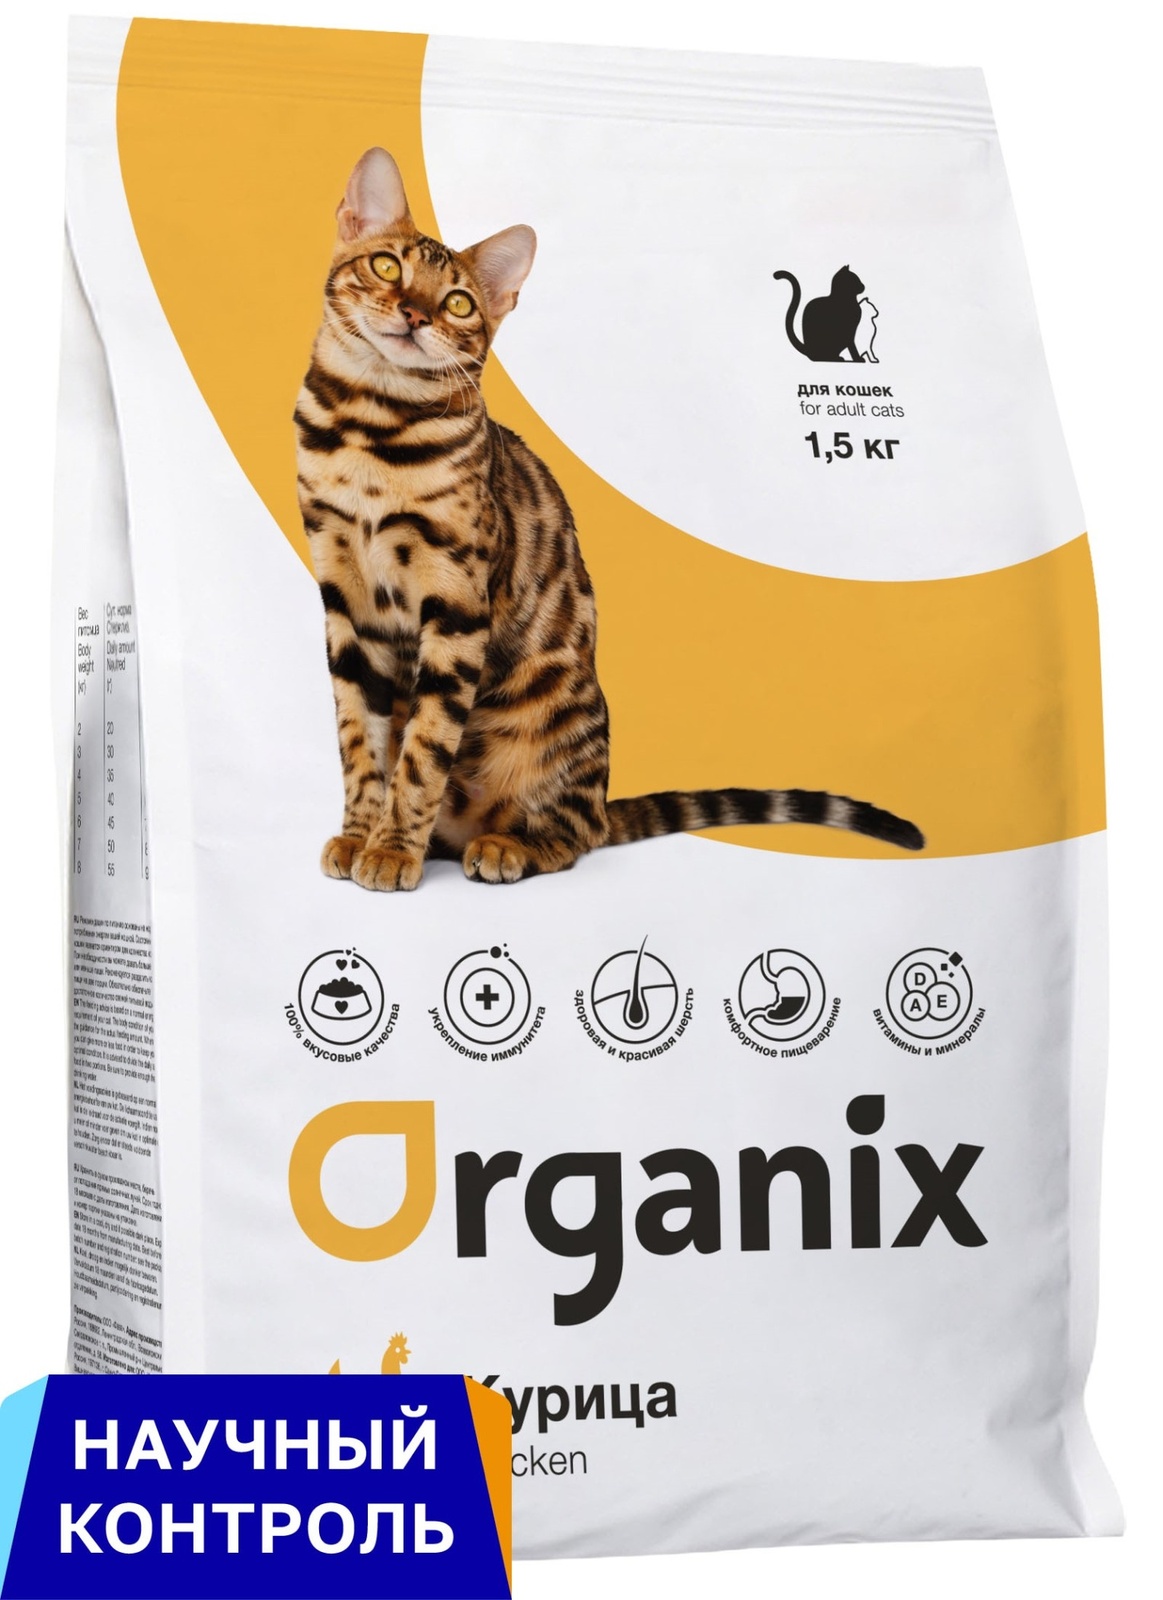 Organix Organix сухой корм для кошек, с курочкой (18 кг)